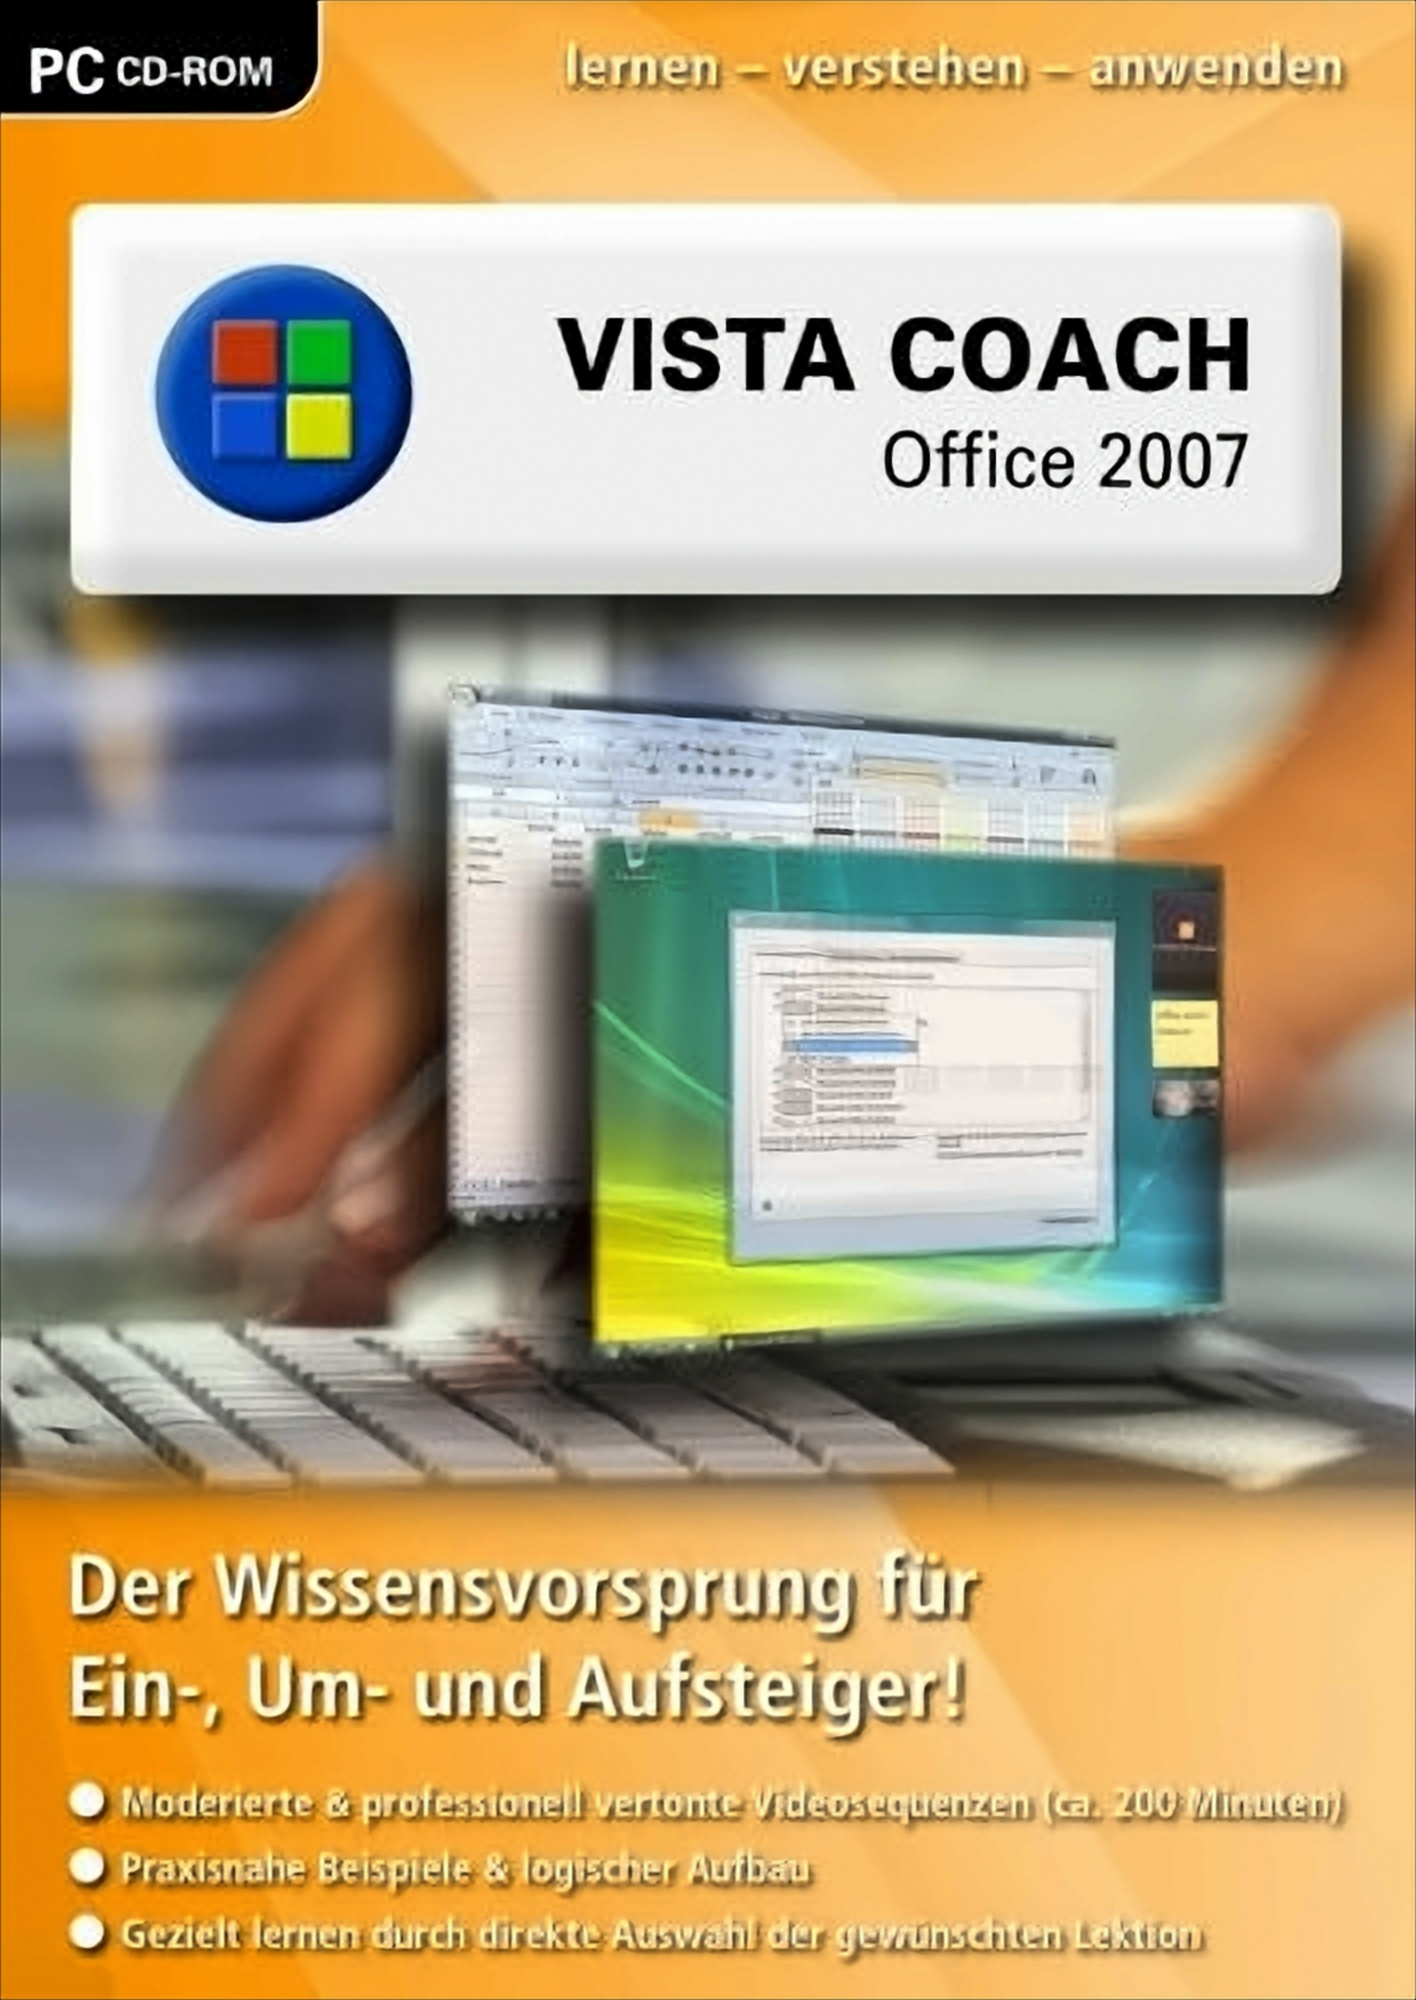 2007 Coach - [PC] Vista Office